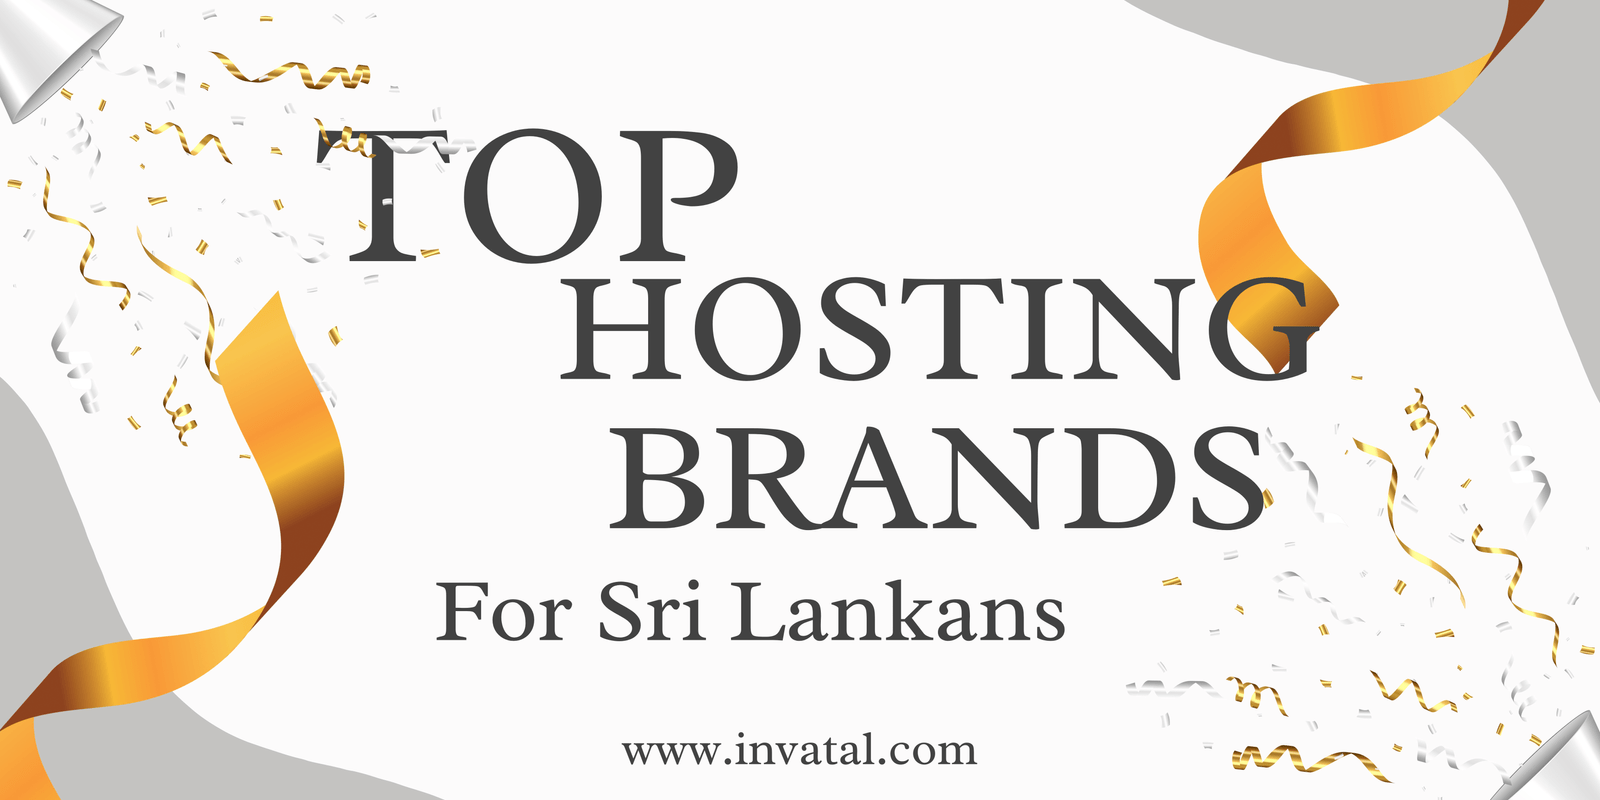 Introduction Top hosting brands for Sri Lankans